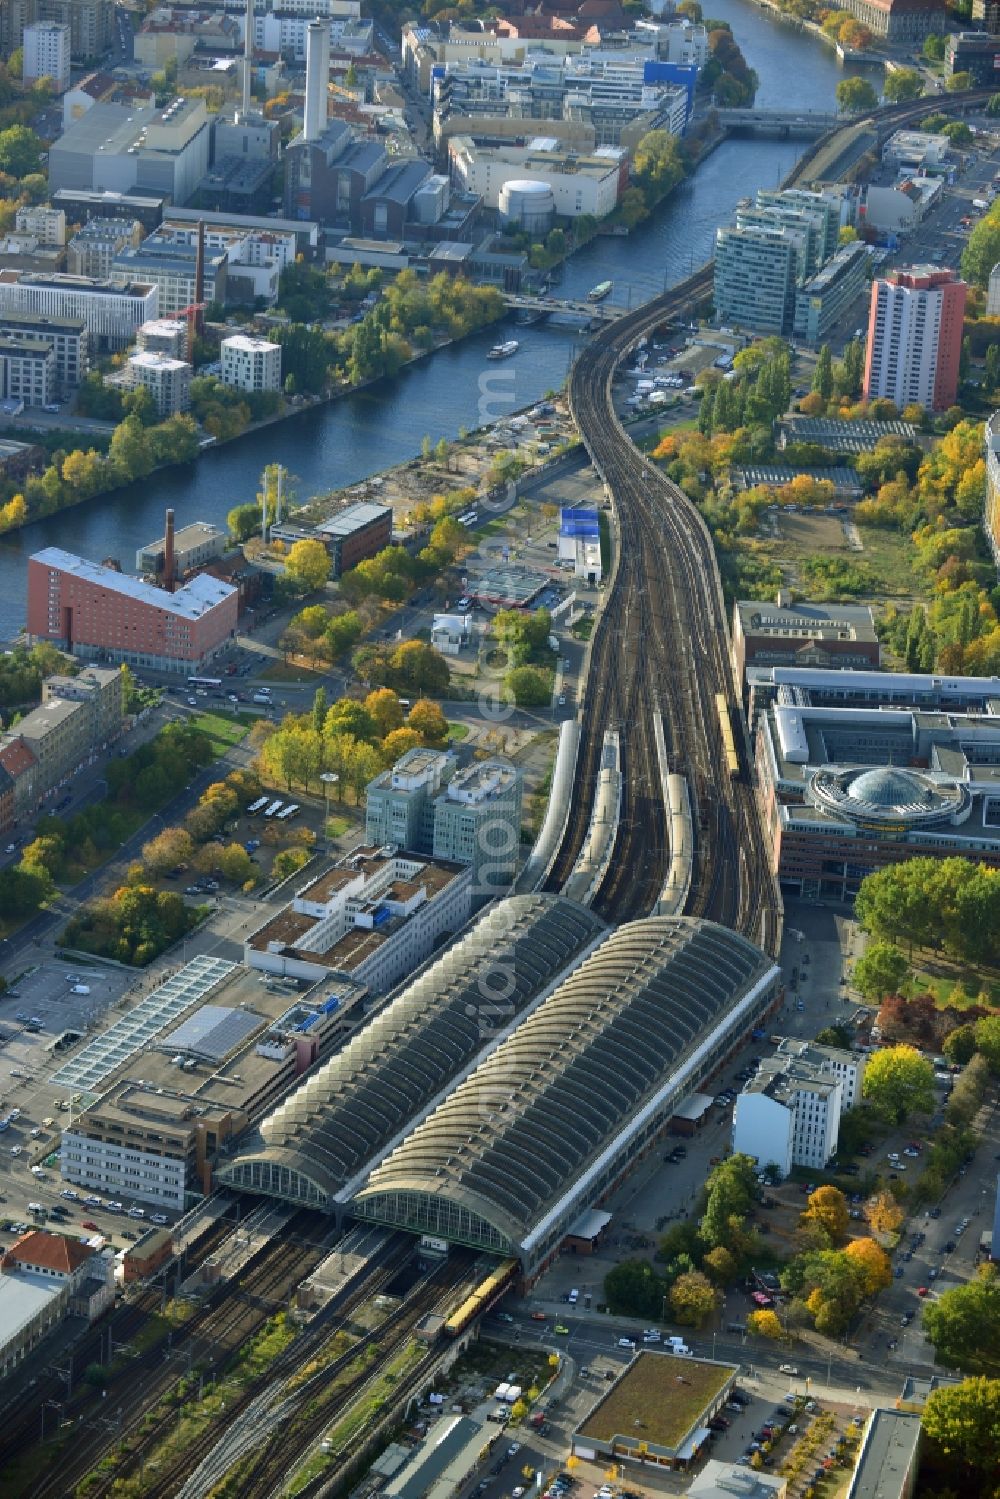 Berlin Friedrichshain from above - The Berlin train- station Ostbahnhof in Berlin-Friedrichshain. It is the third biggest station in Berlin